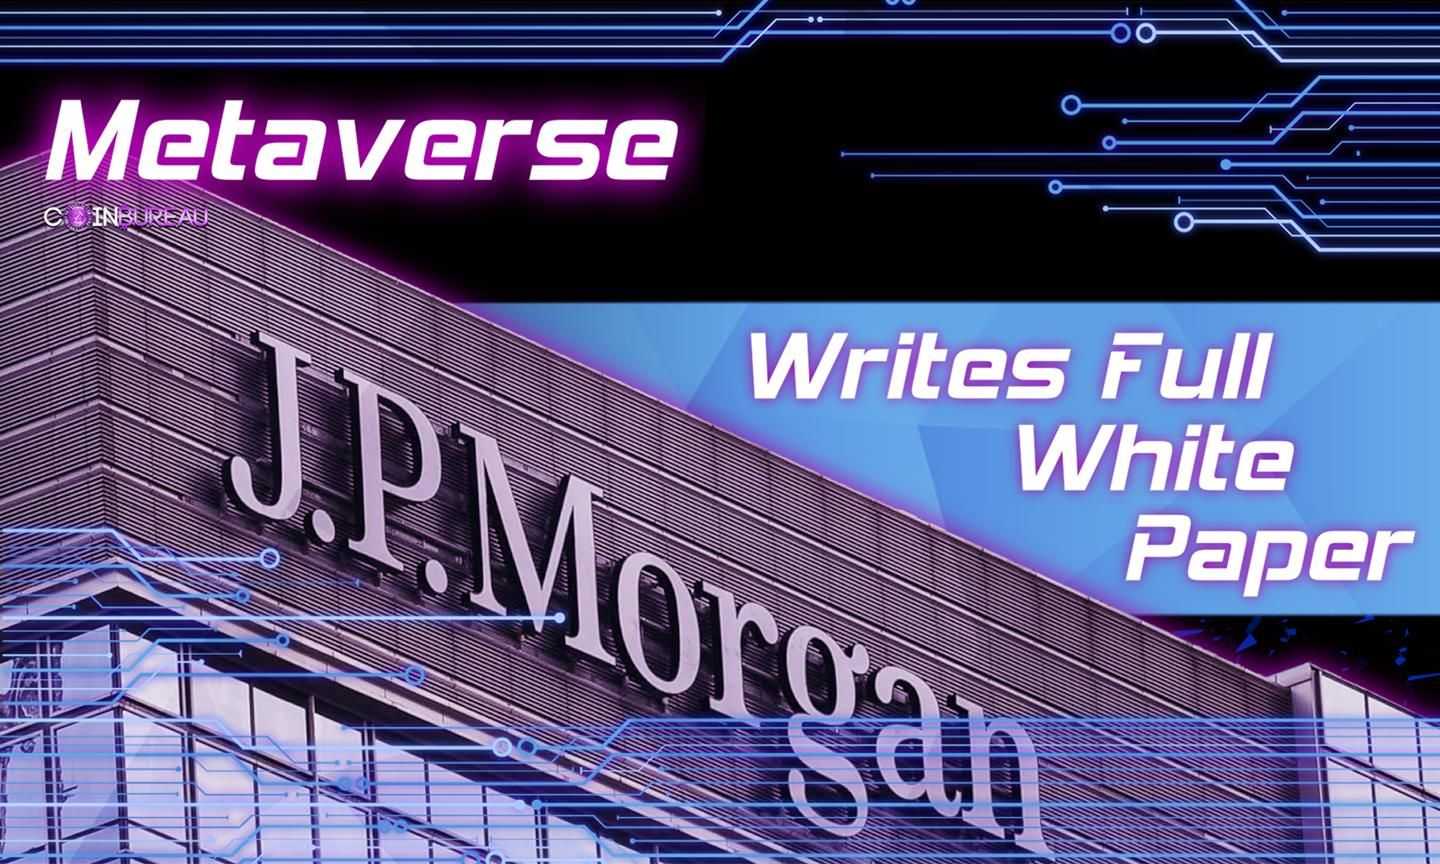 JPMorgan Releases Full White Paper On Metaverse